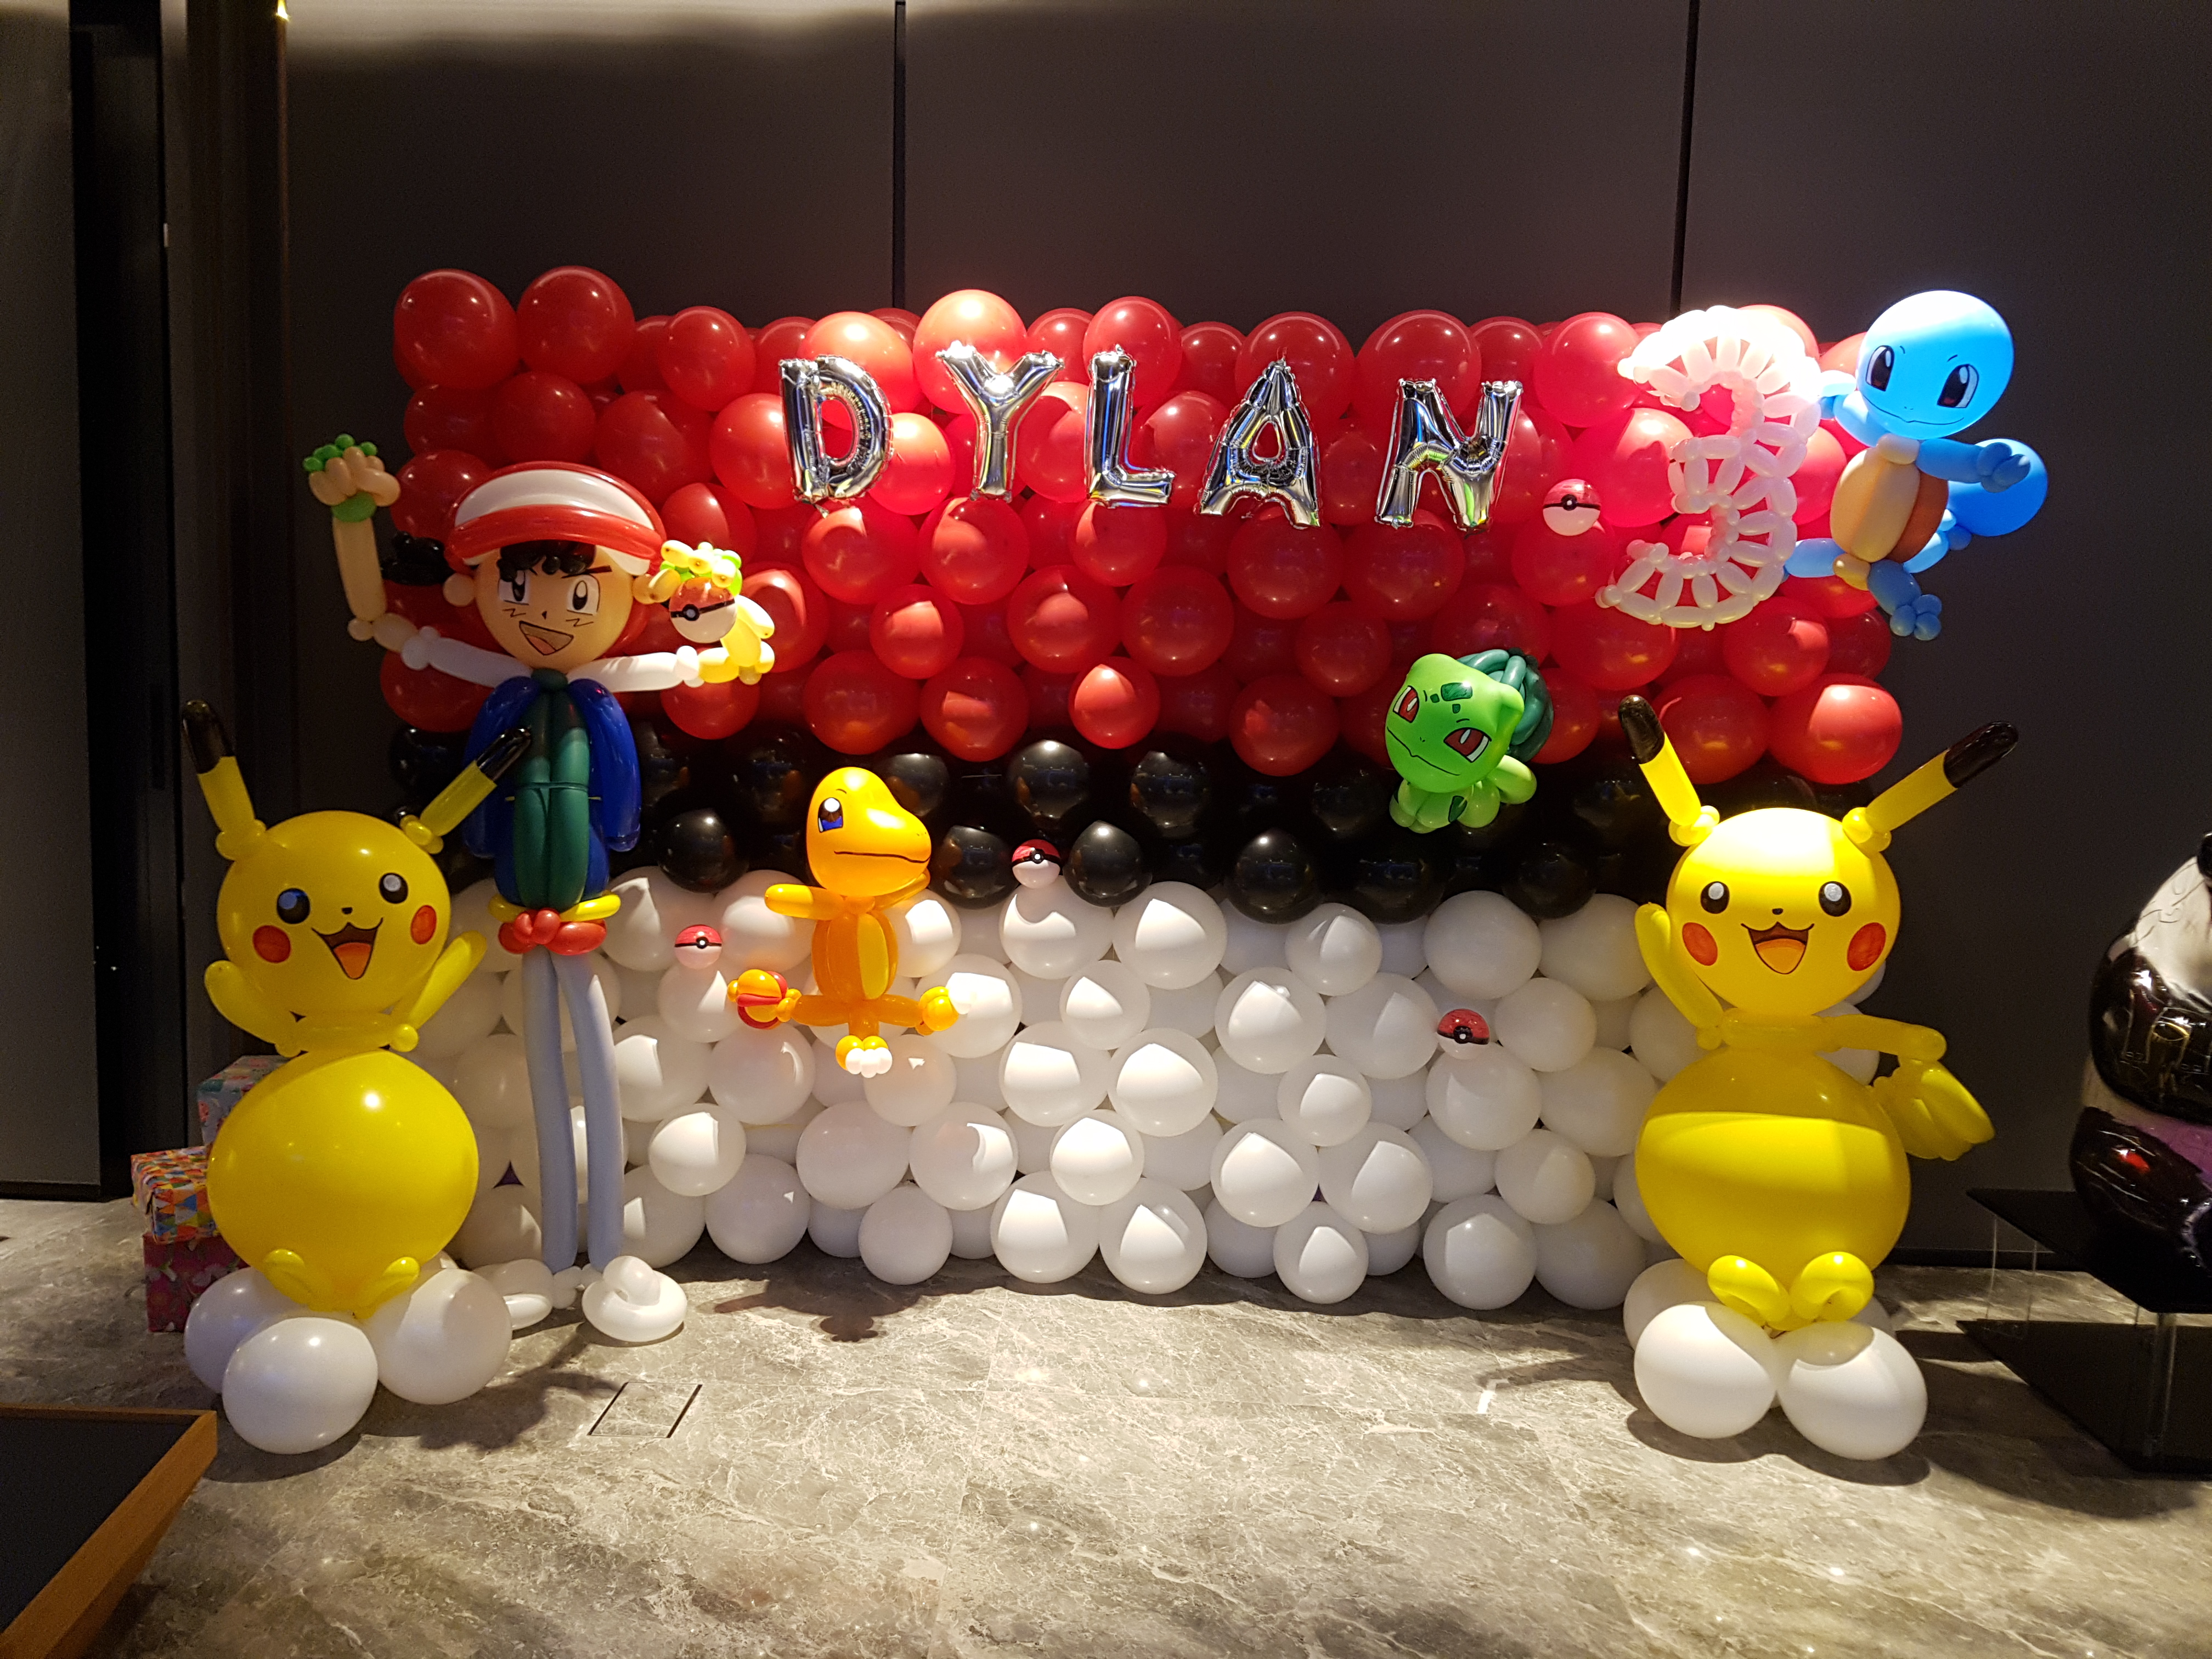 Pokemon theme balloon backdrop decorations for birthday party! - Singapore  Balloon Decoration Services - Balloon Workshop and Balloon Sculpting